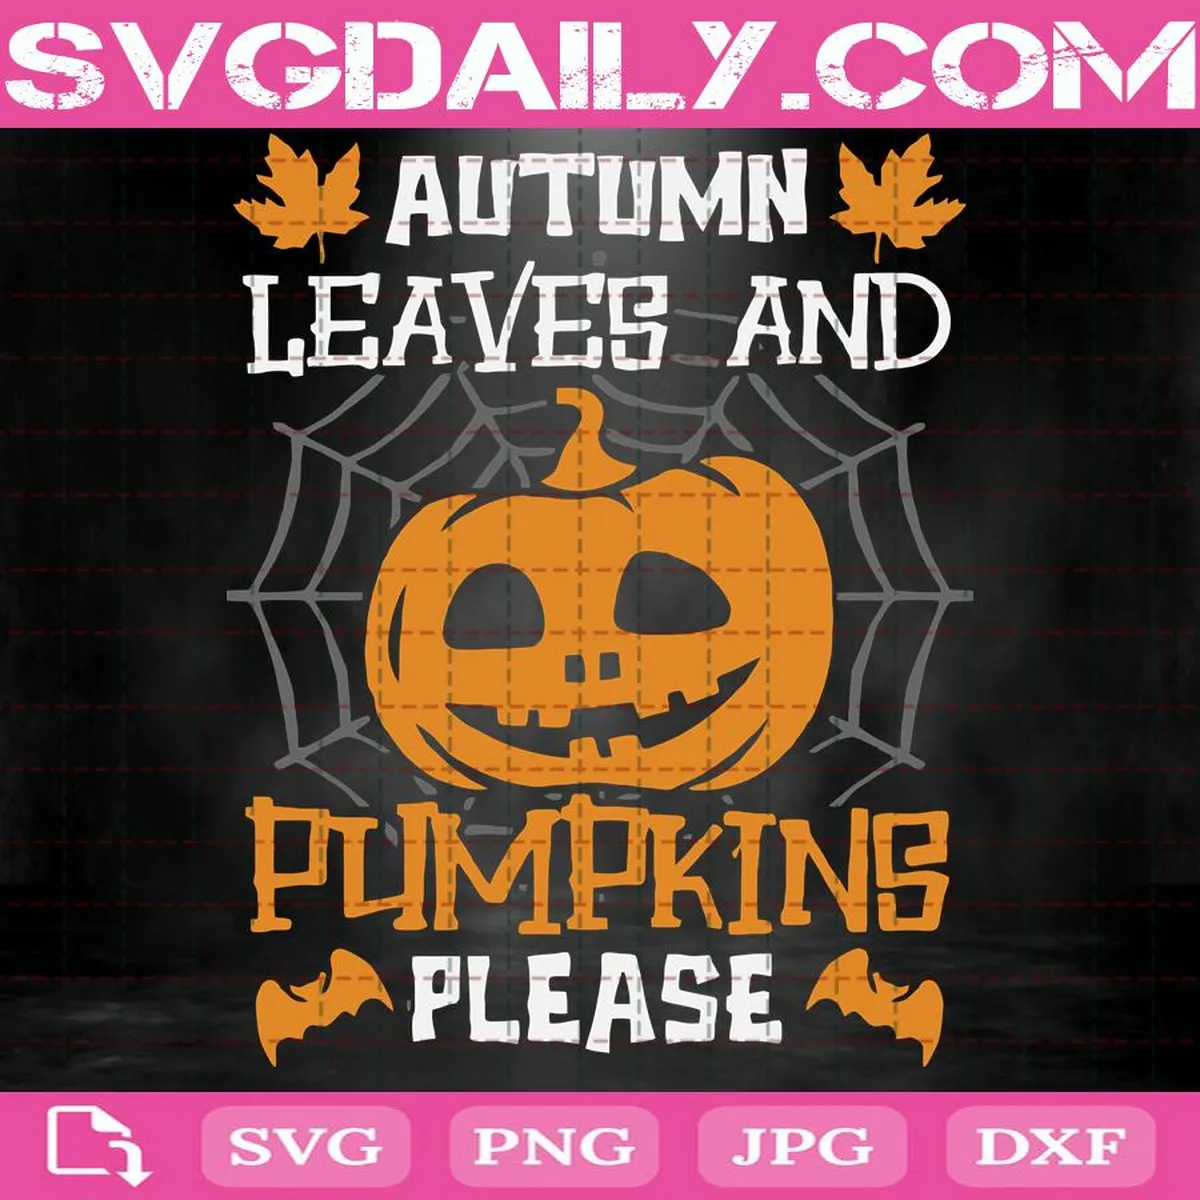 Autumn Leaves And Pumpkins Please Svg, Pumpkins Svg, Halloween Svg, Fall Svg, Thanksgiving Svg, Autumn Svg